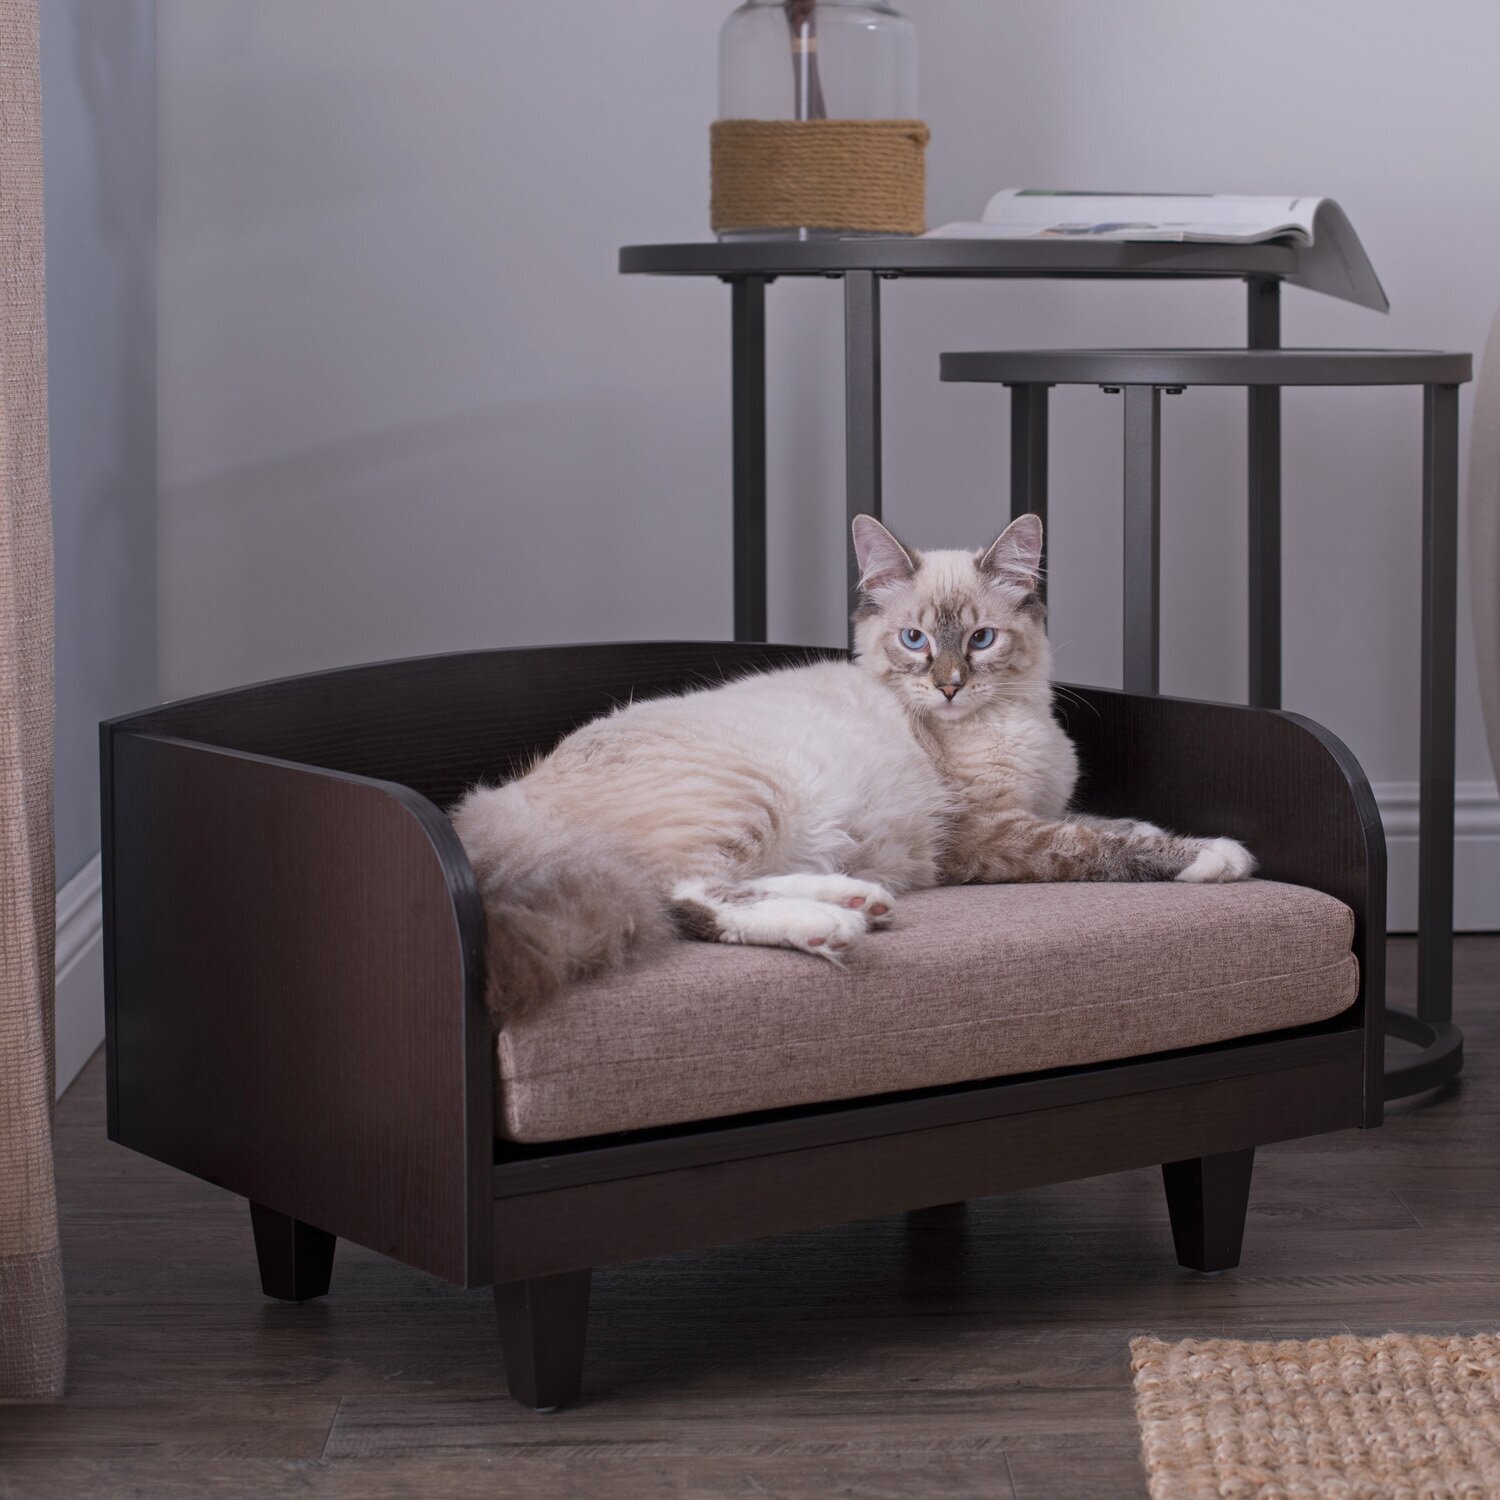 Stylish outdoor dog sofa in an indoor furniture design